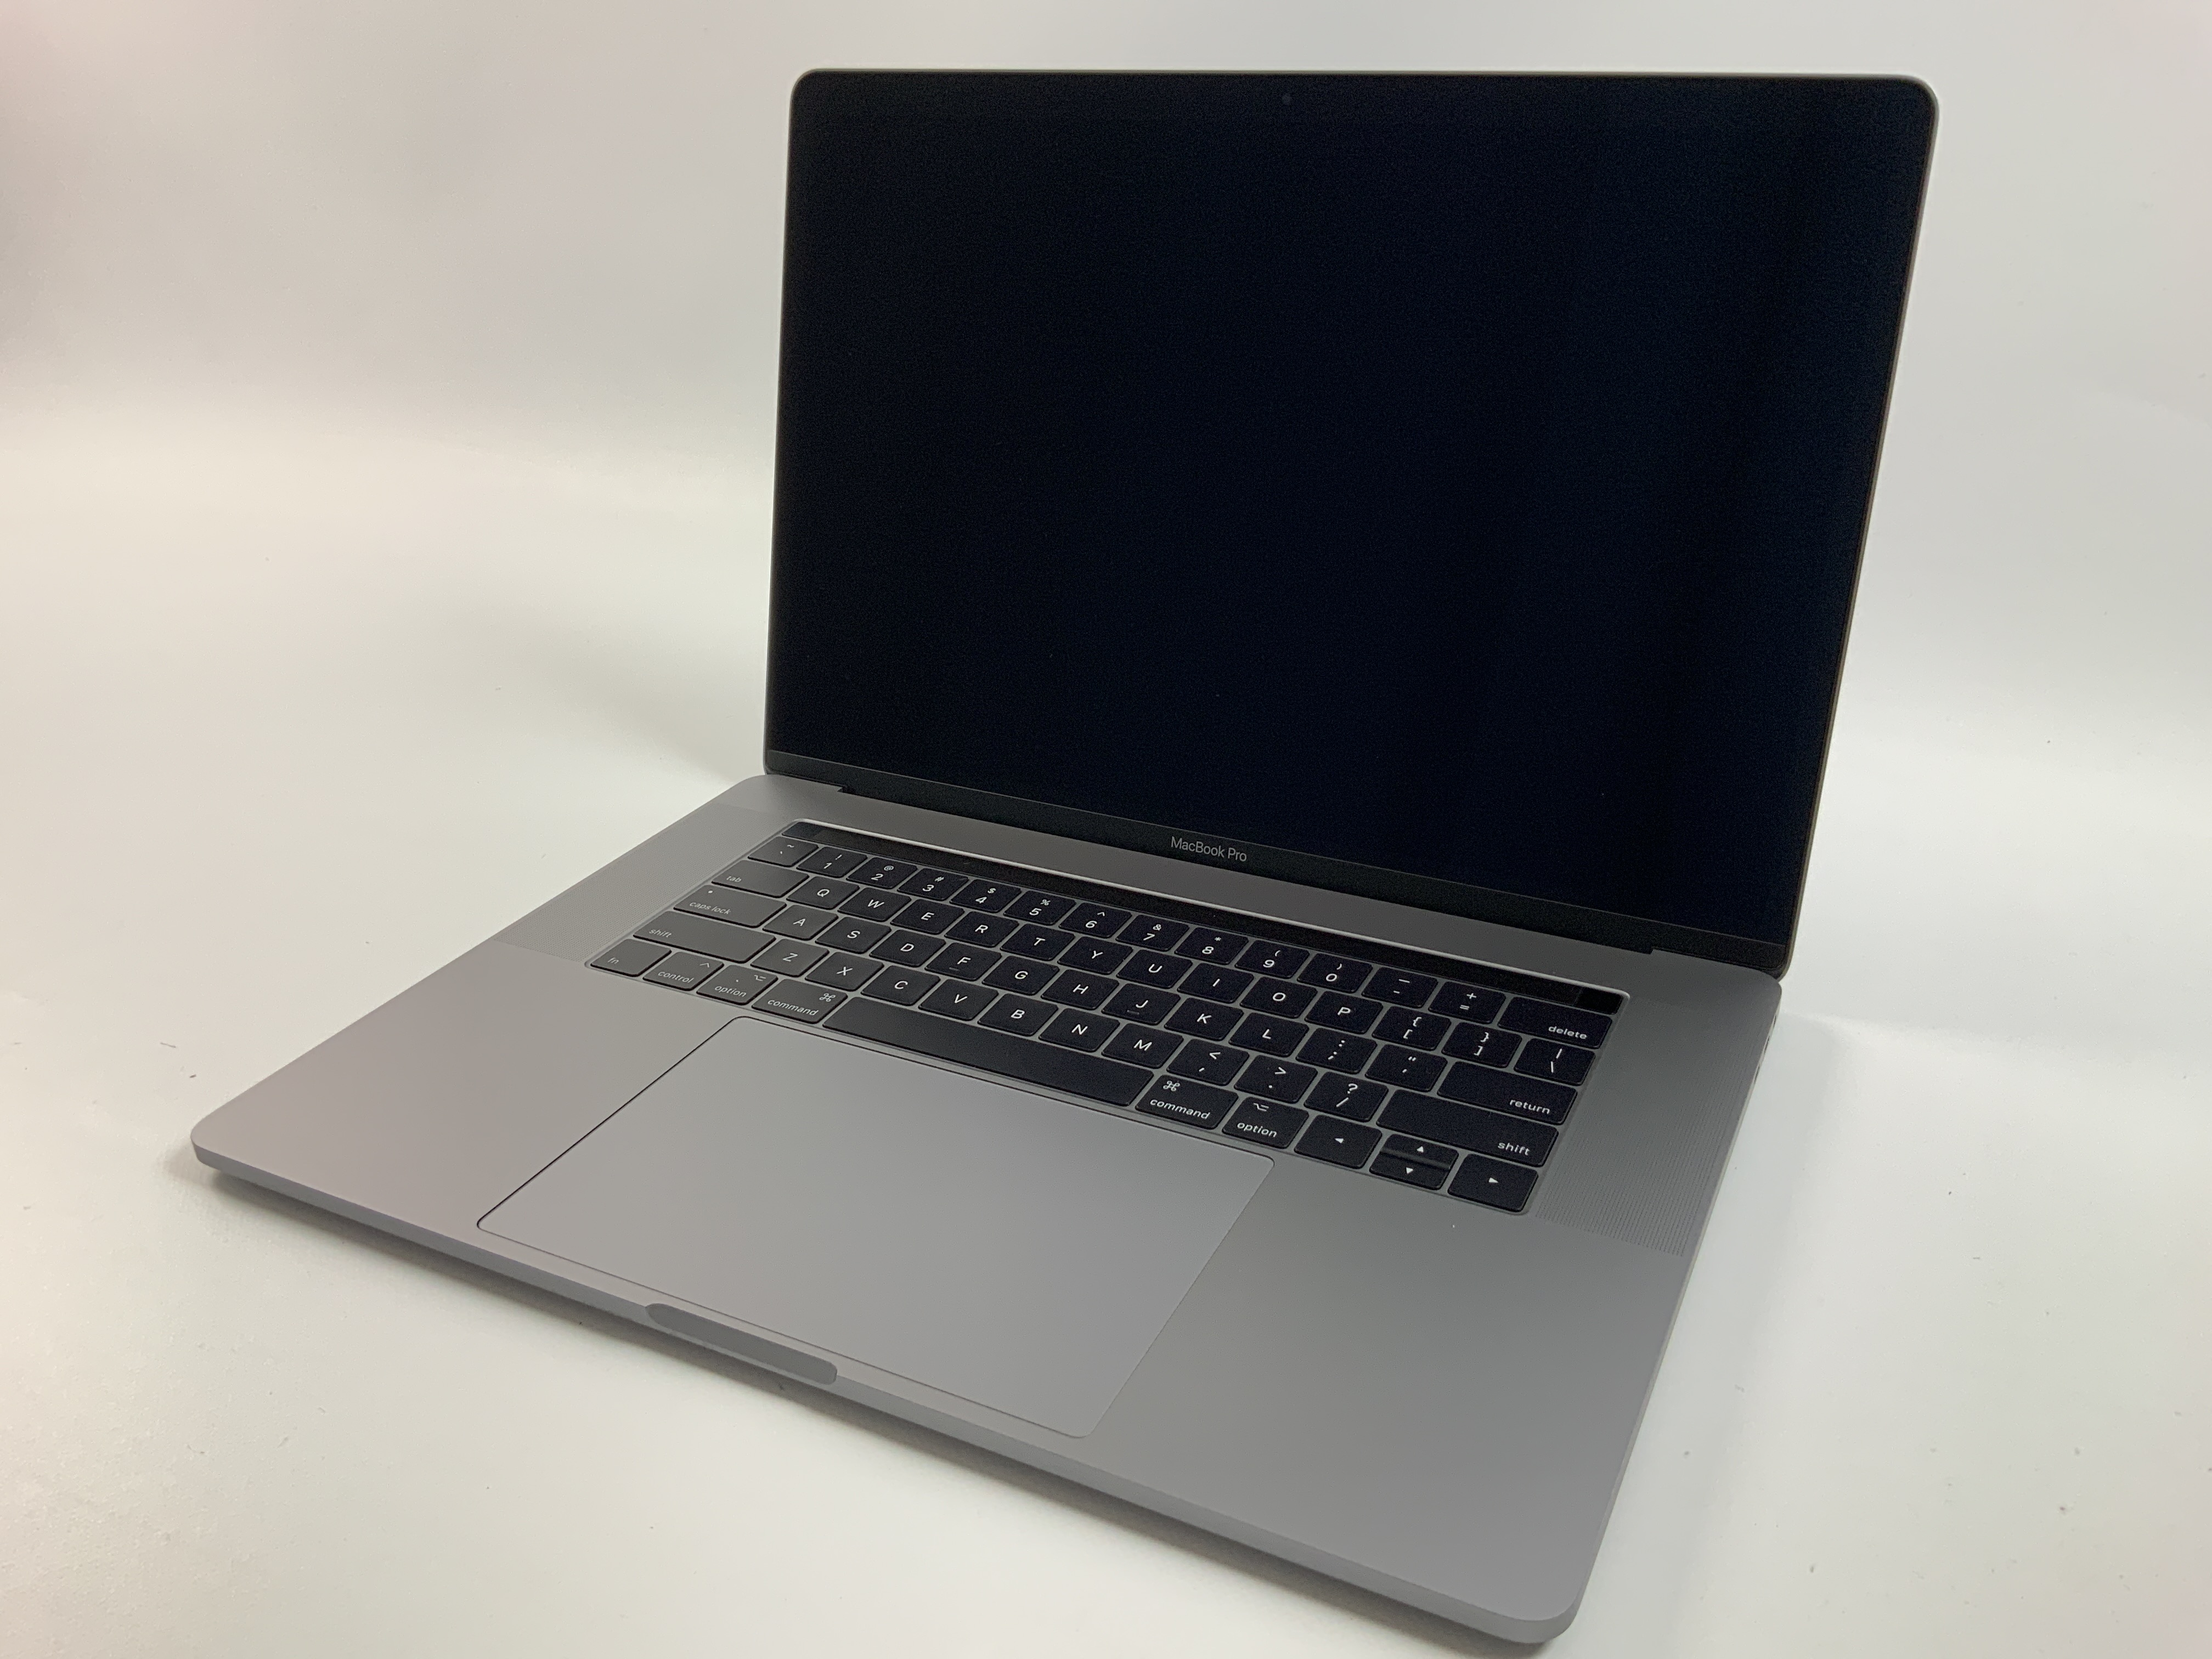 MacBook Pro 15" Touch Bar Mid 2017 (Intel Quad-Core i7 2.8 GHz 16 GB RAM 512 GB SSD), Space Gray, Intel Quad-Core i7 2.8 GHz, 16 GB RAM, 512 GB SSD, Afbeelding 1